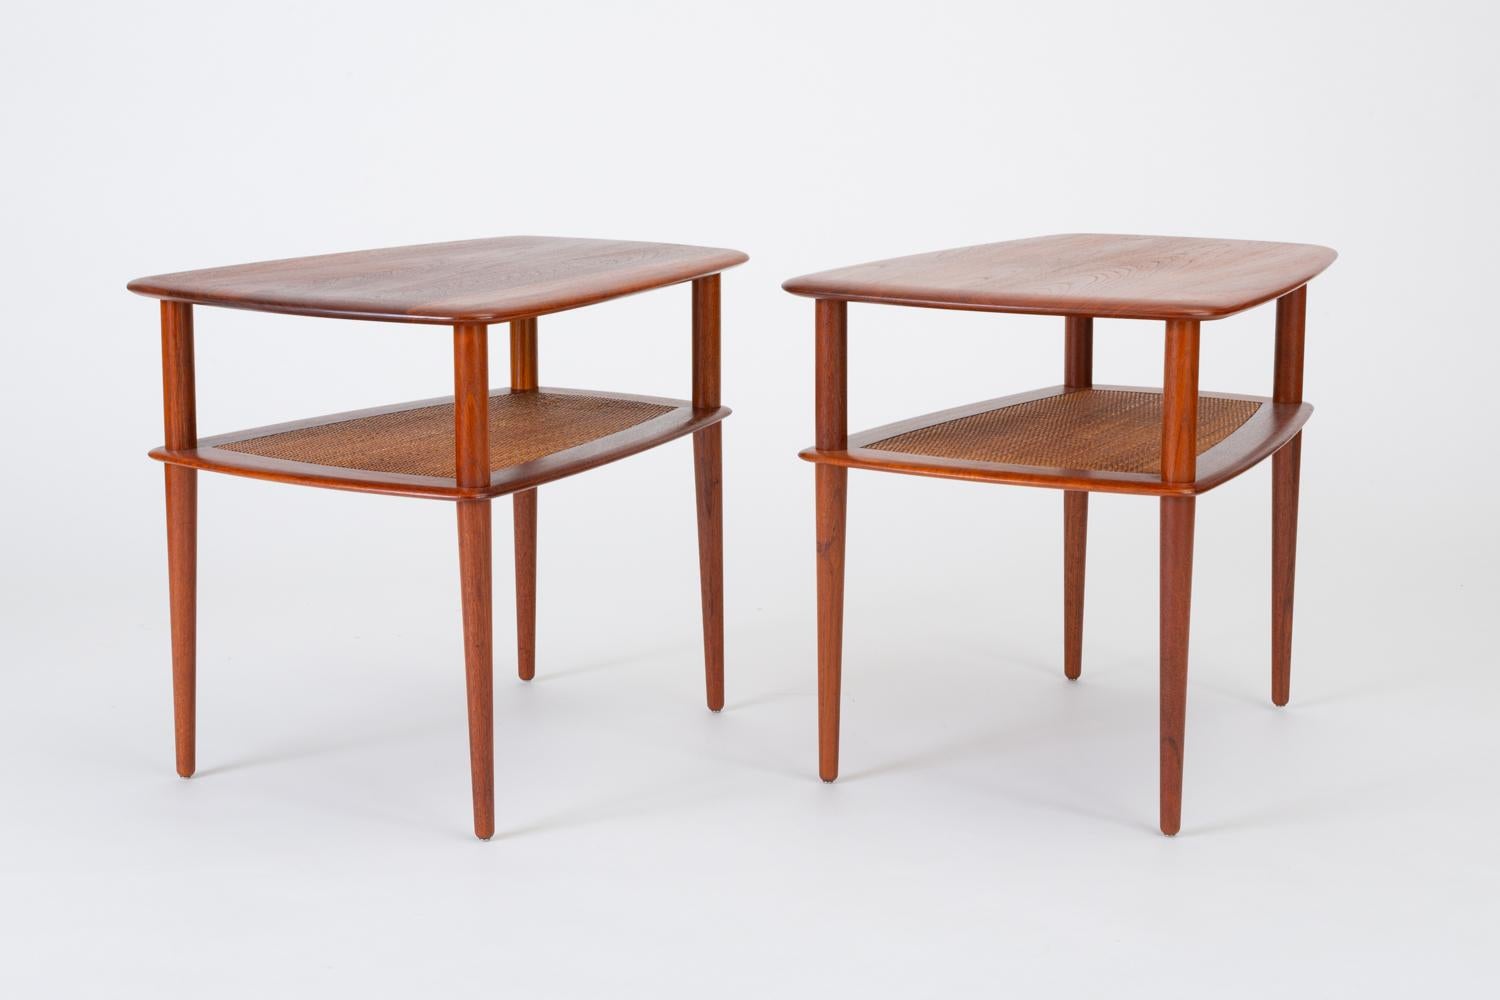 Woven Pair of Teak Side Tables with Cane Shelf by Hvidt & Mølgaard for France & Daverk